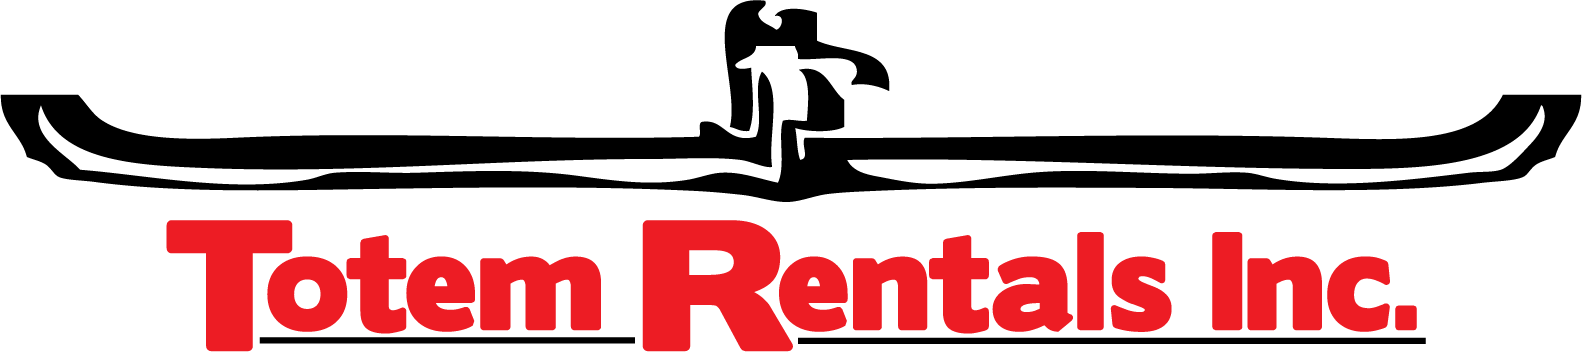 rental logo_FINAL